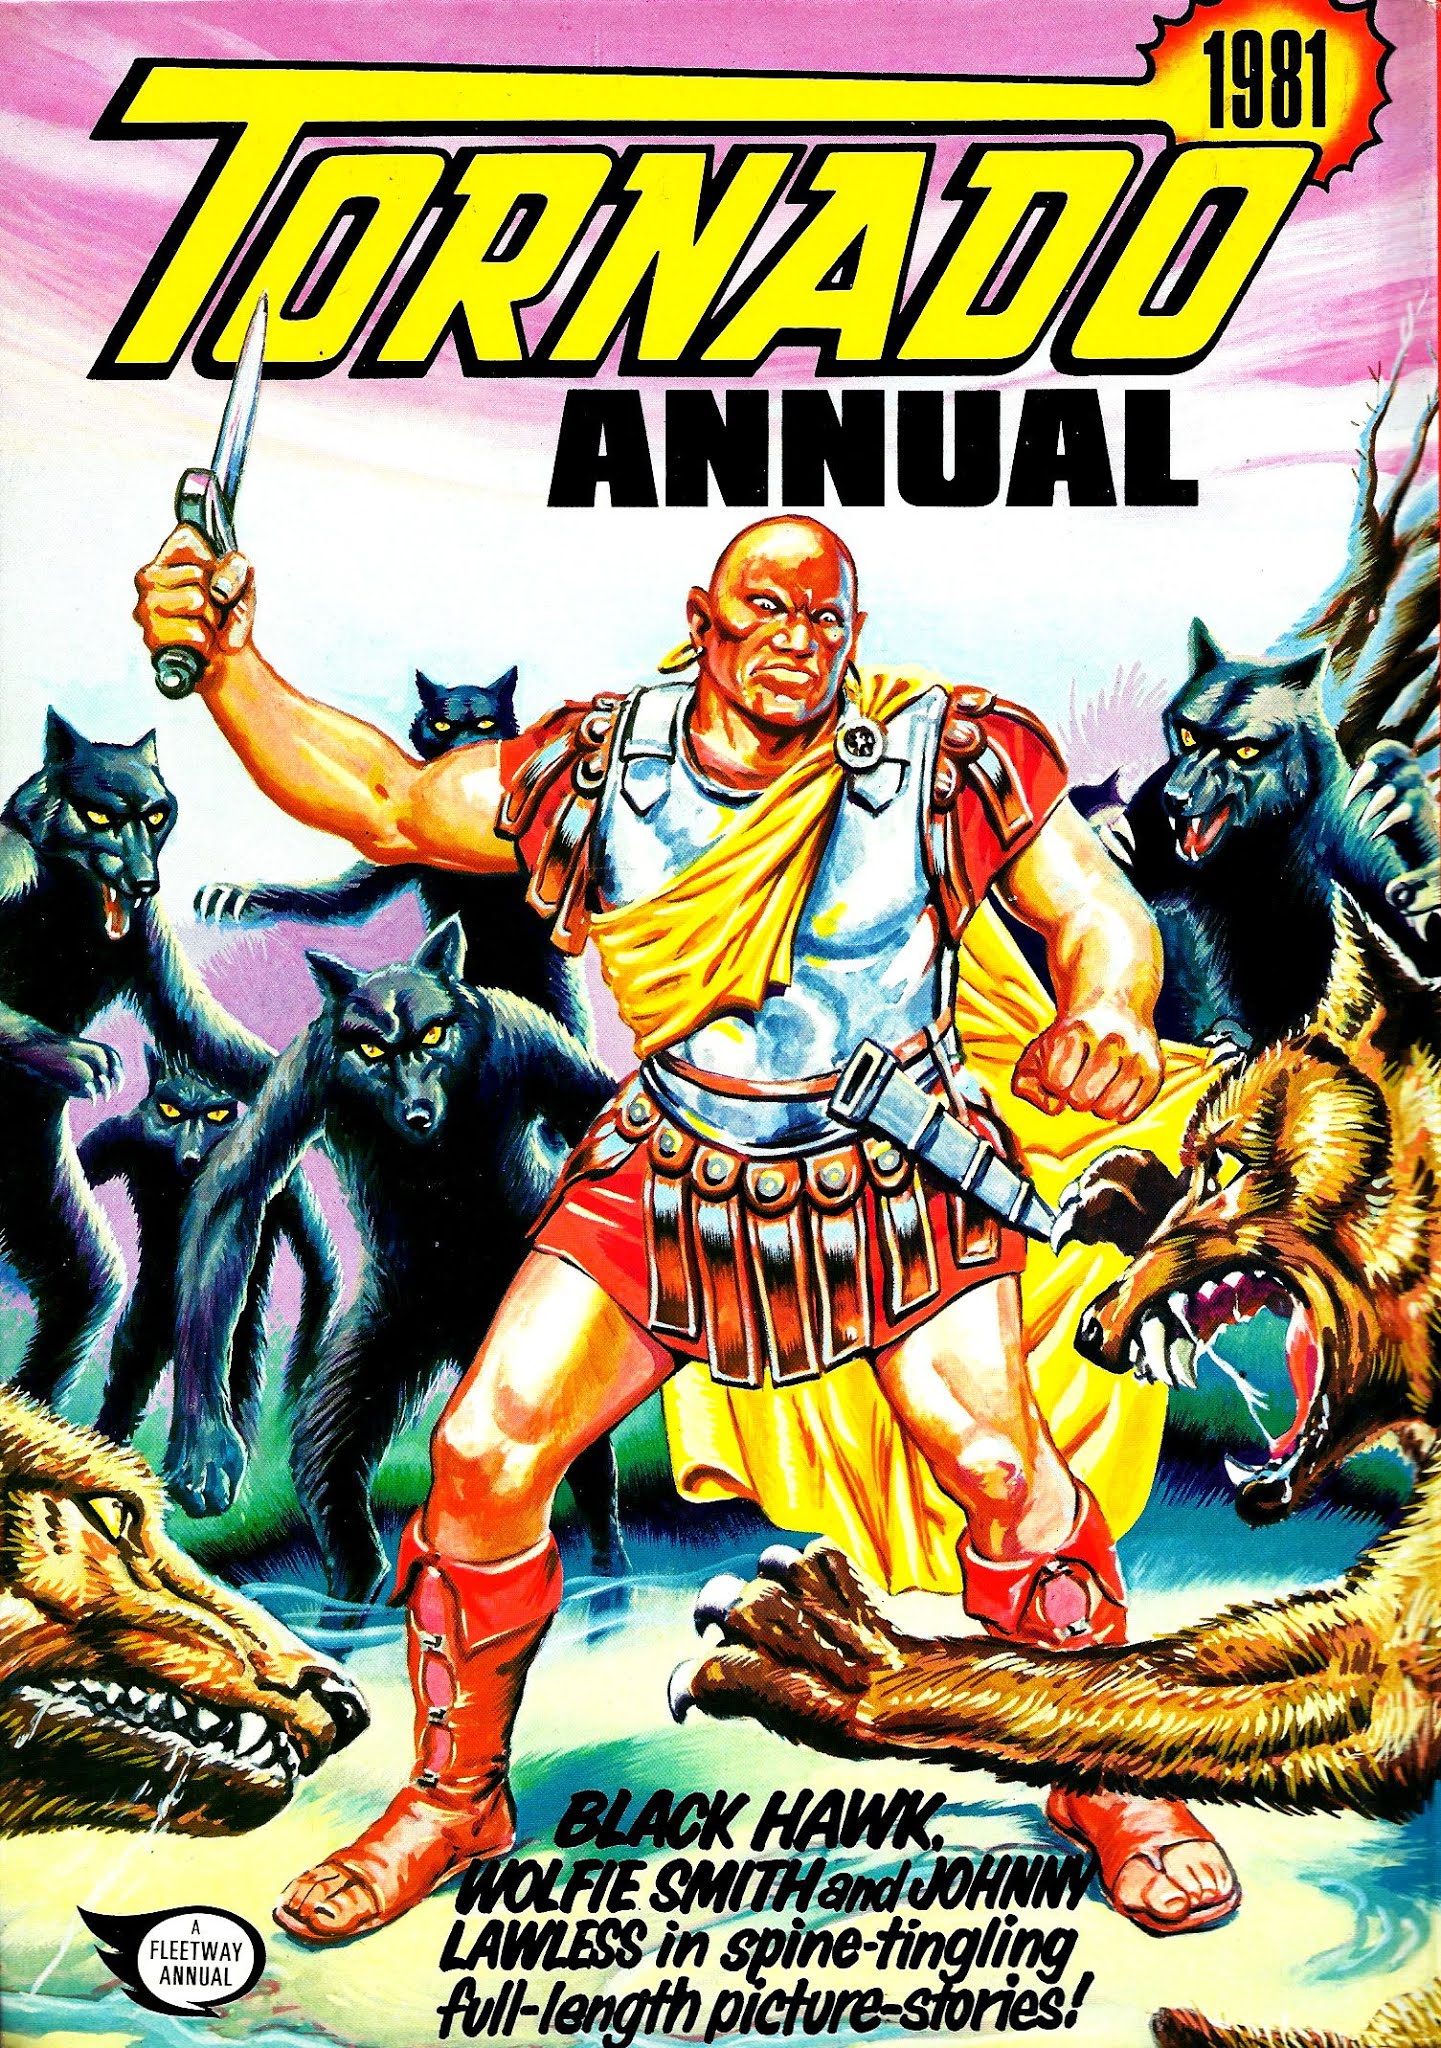 Read online Tornado comic -  Issue # Annual 1981 - 128